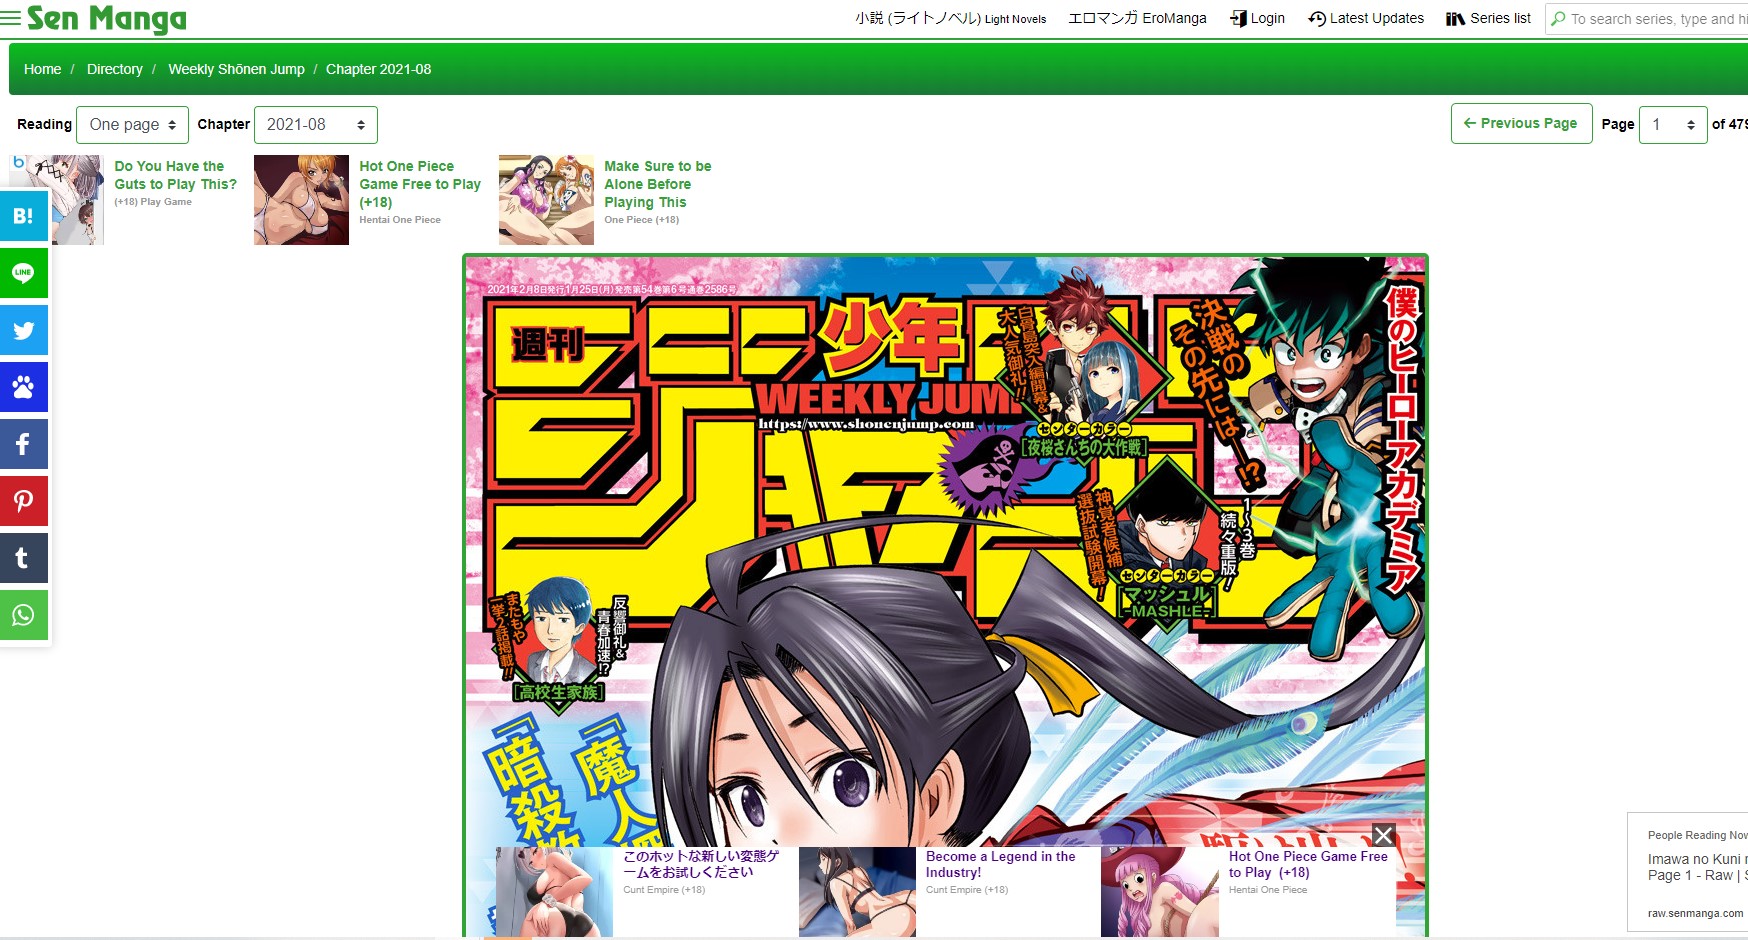 Sen Mangaは日本語で読めるか使い方を解説 違法な漫画サイトで要注意 代わりになるサイトは たかたろうのエンタメブログ